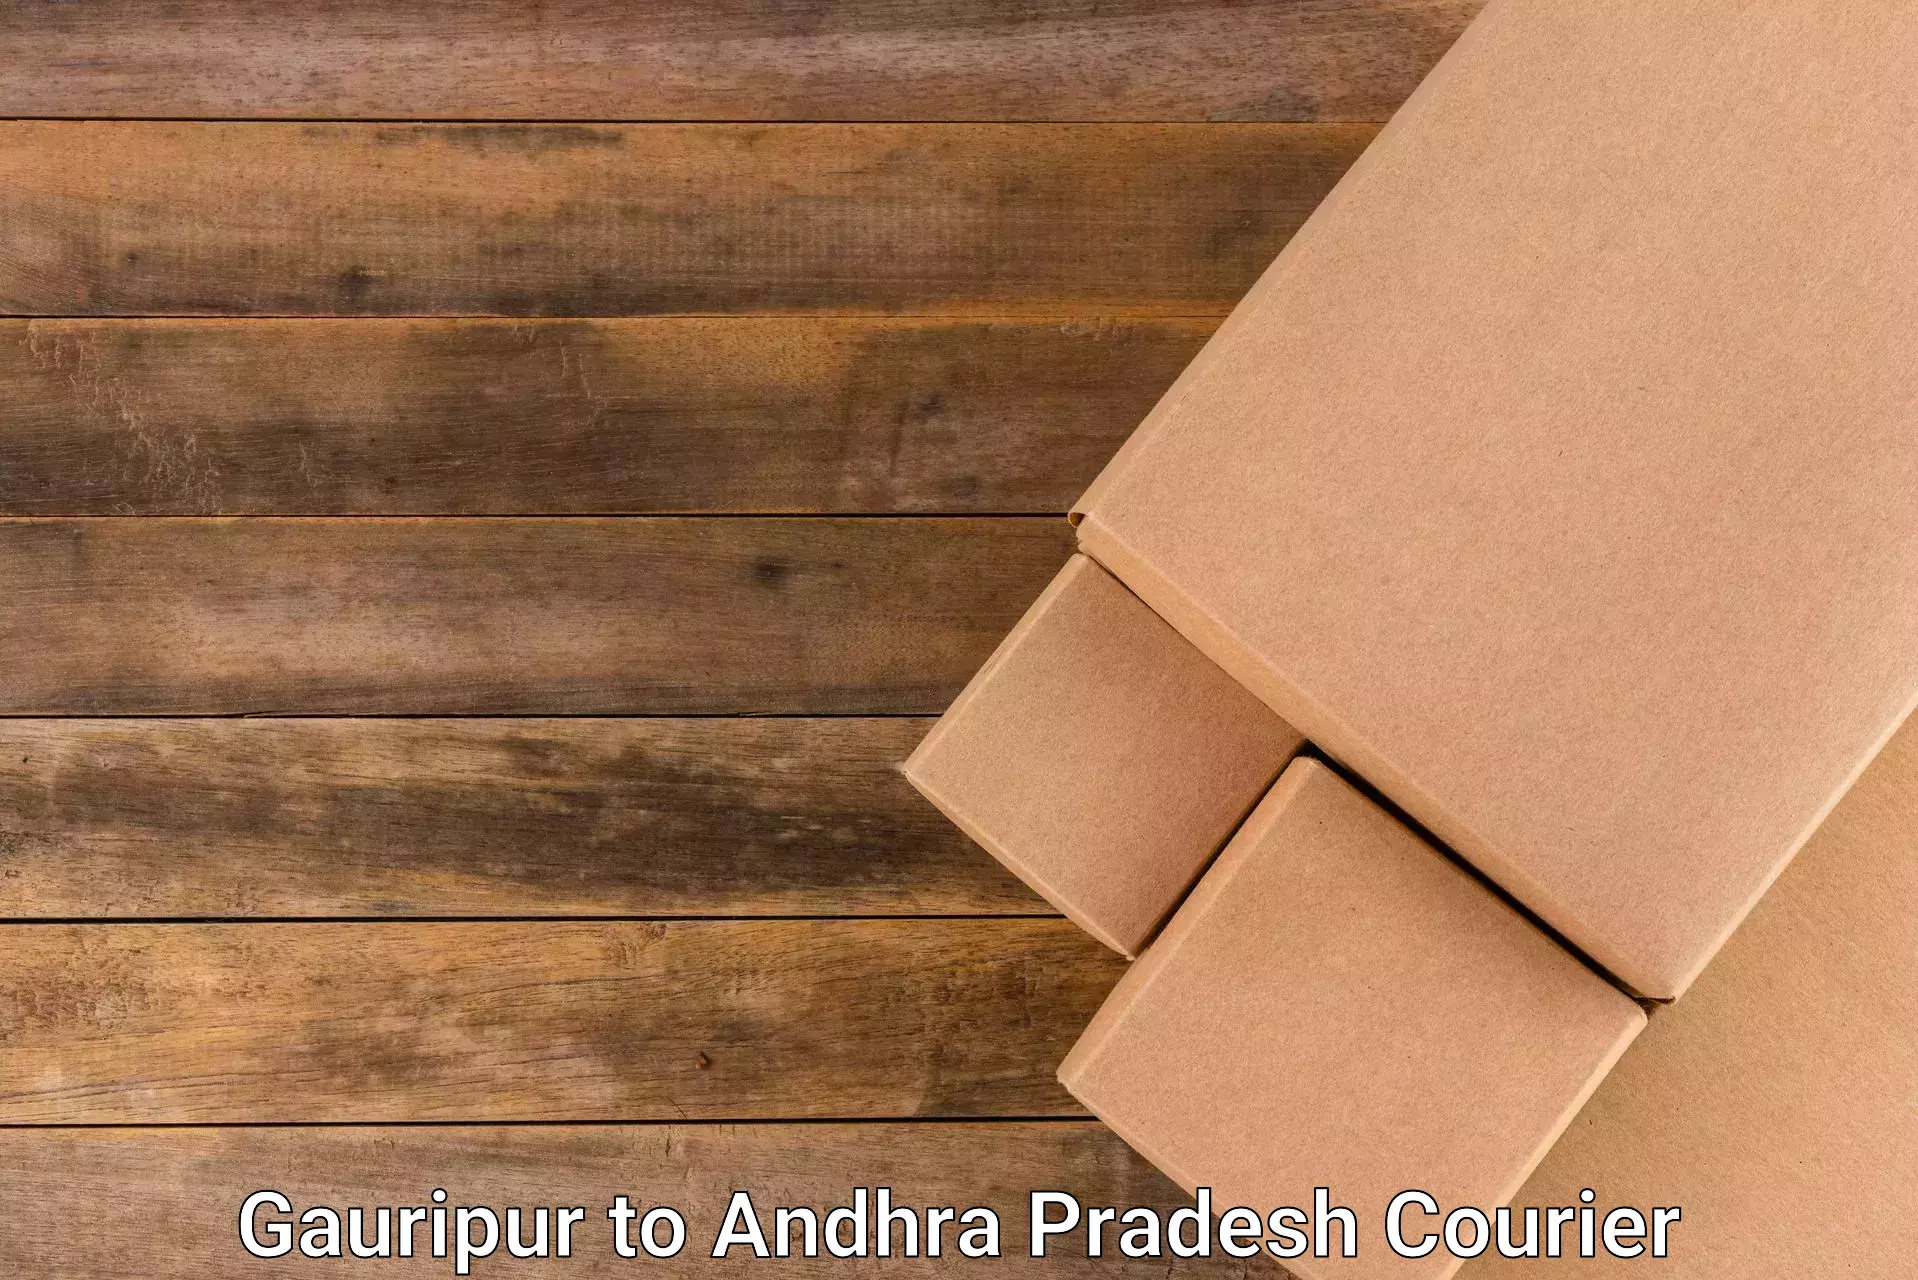 Discounted shipping Gauripur to Mudigubba